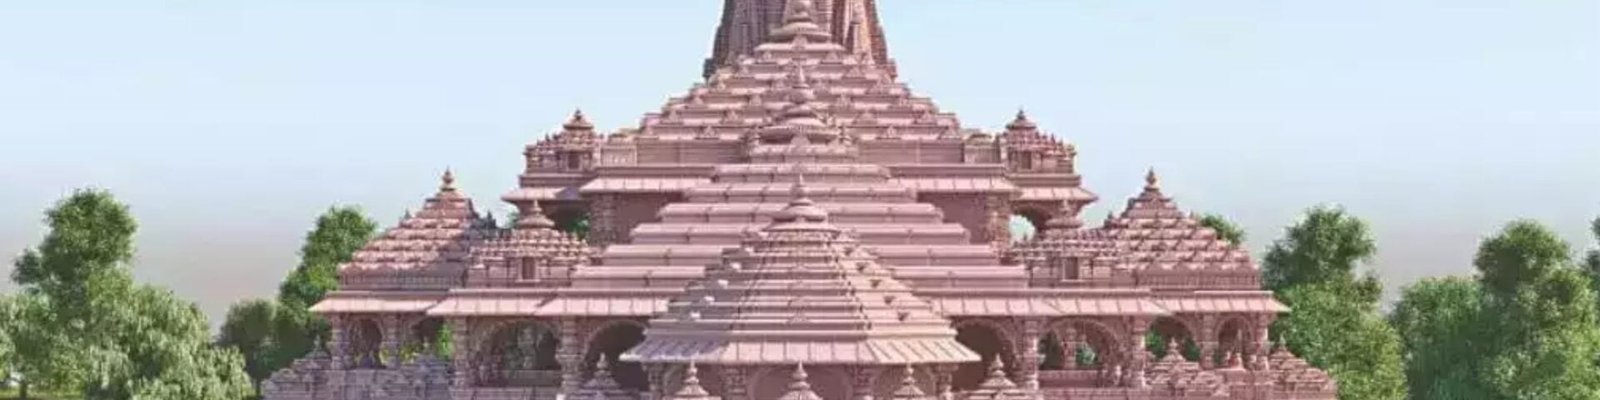 Ayodhya Ram Mandir Ram Temple in Ayodhya